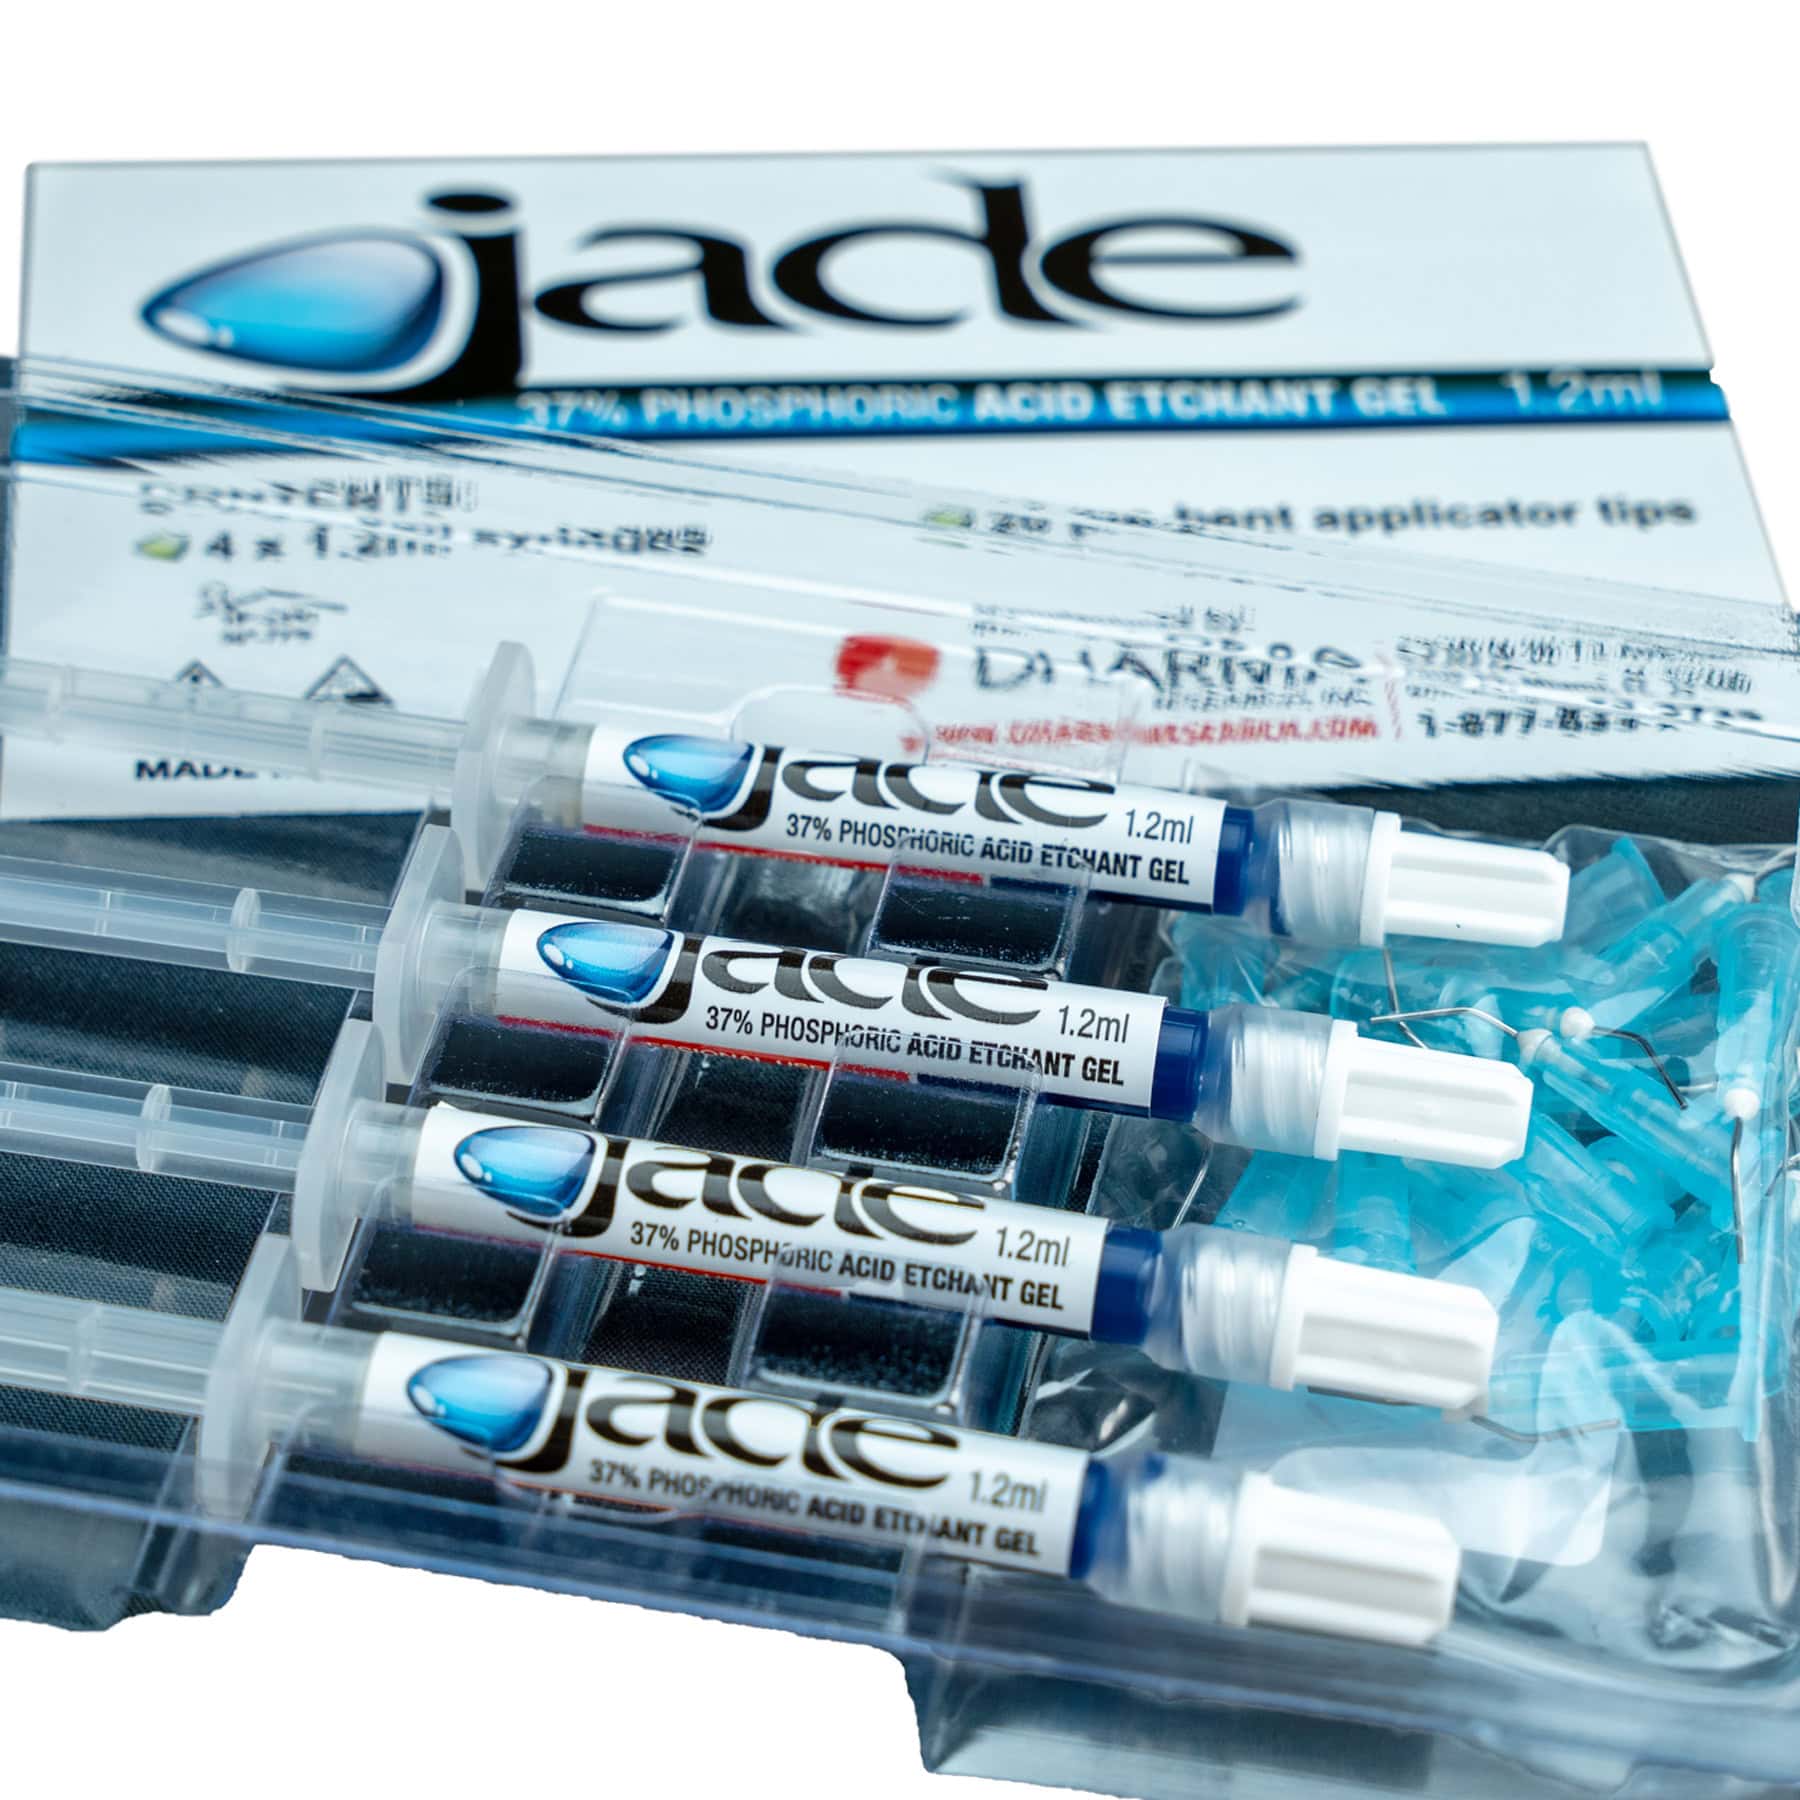 Jade Blue 37% Phosphoric Acid Etchant Gel – 4 X 1.2ml Syringes, 20 Pre-bent Applicator Tips